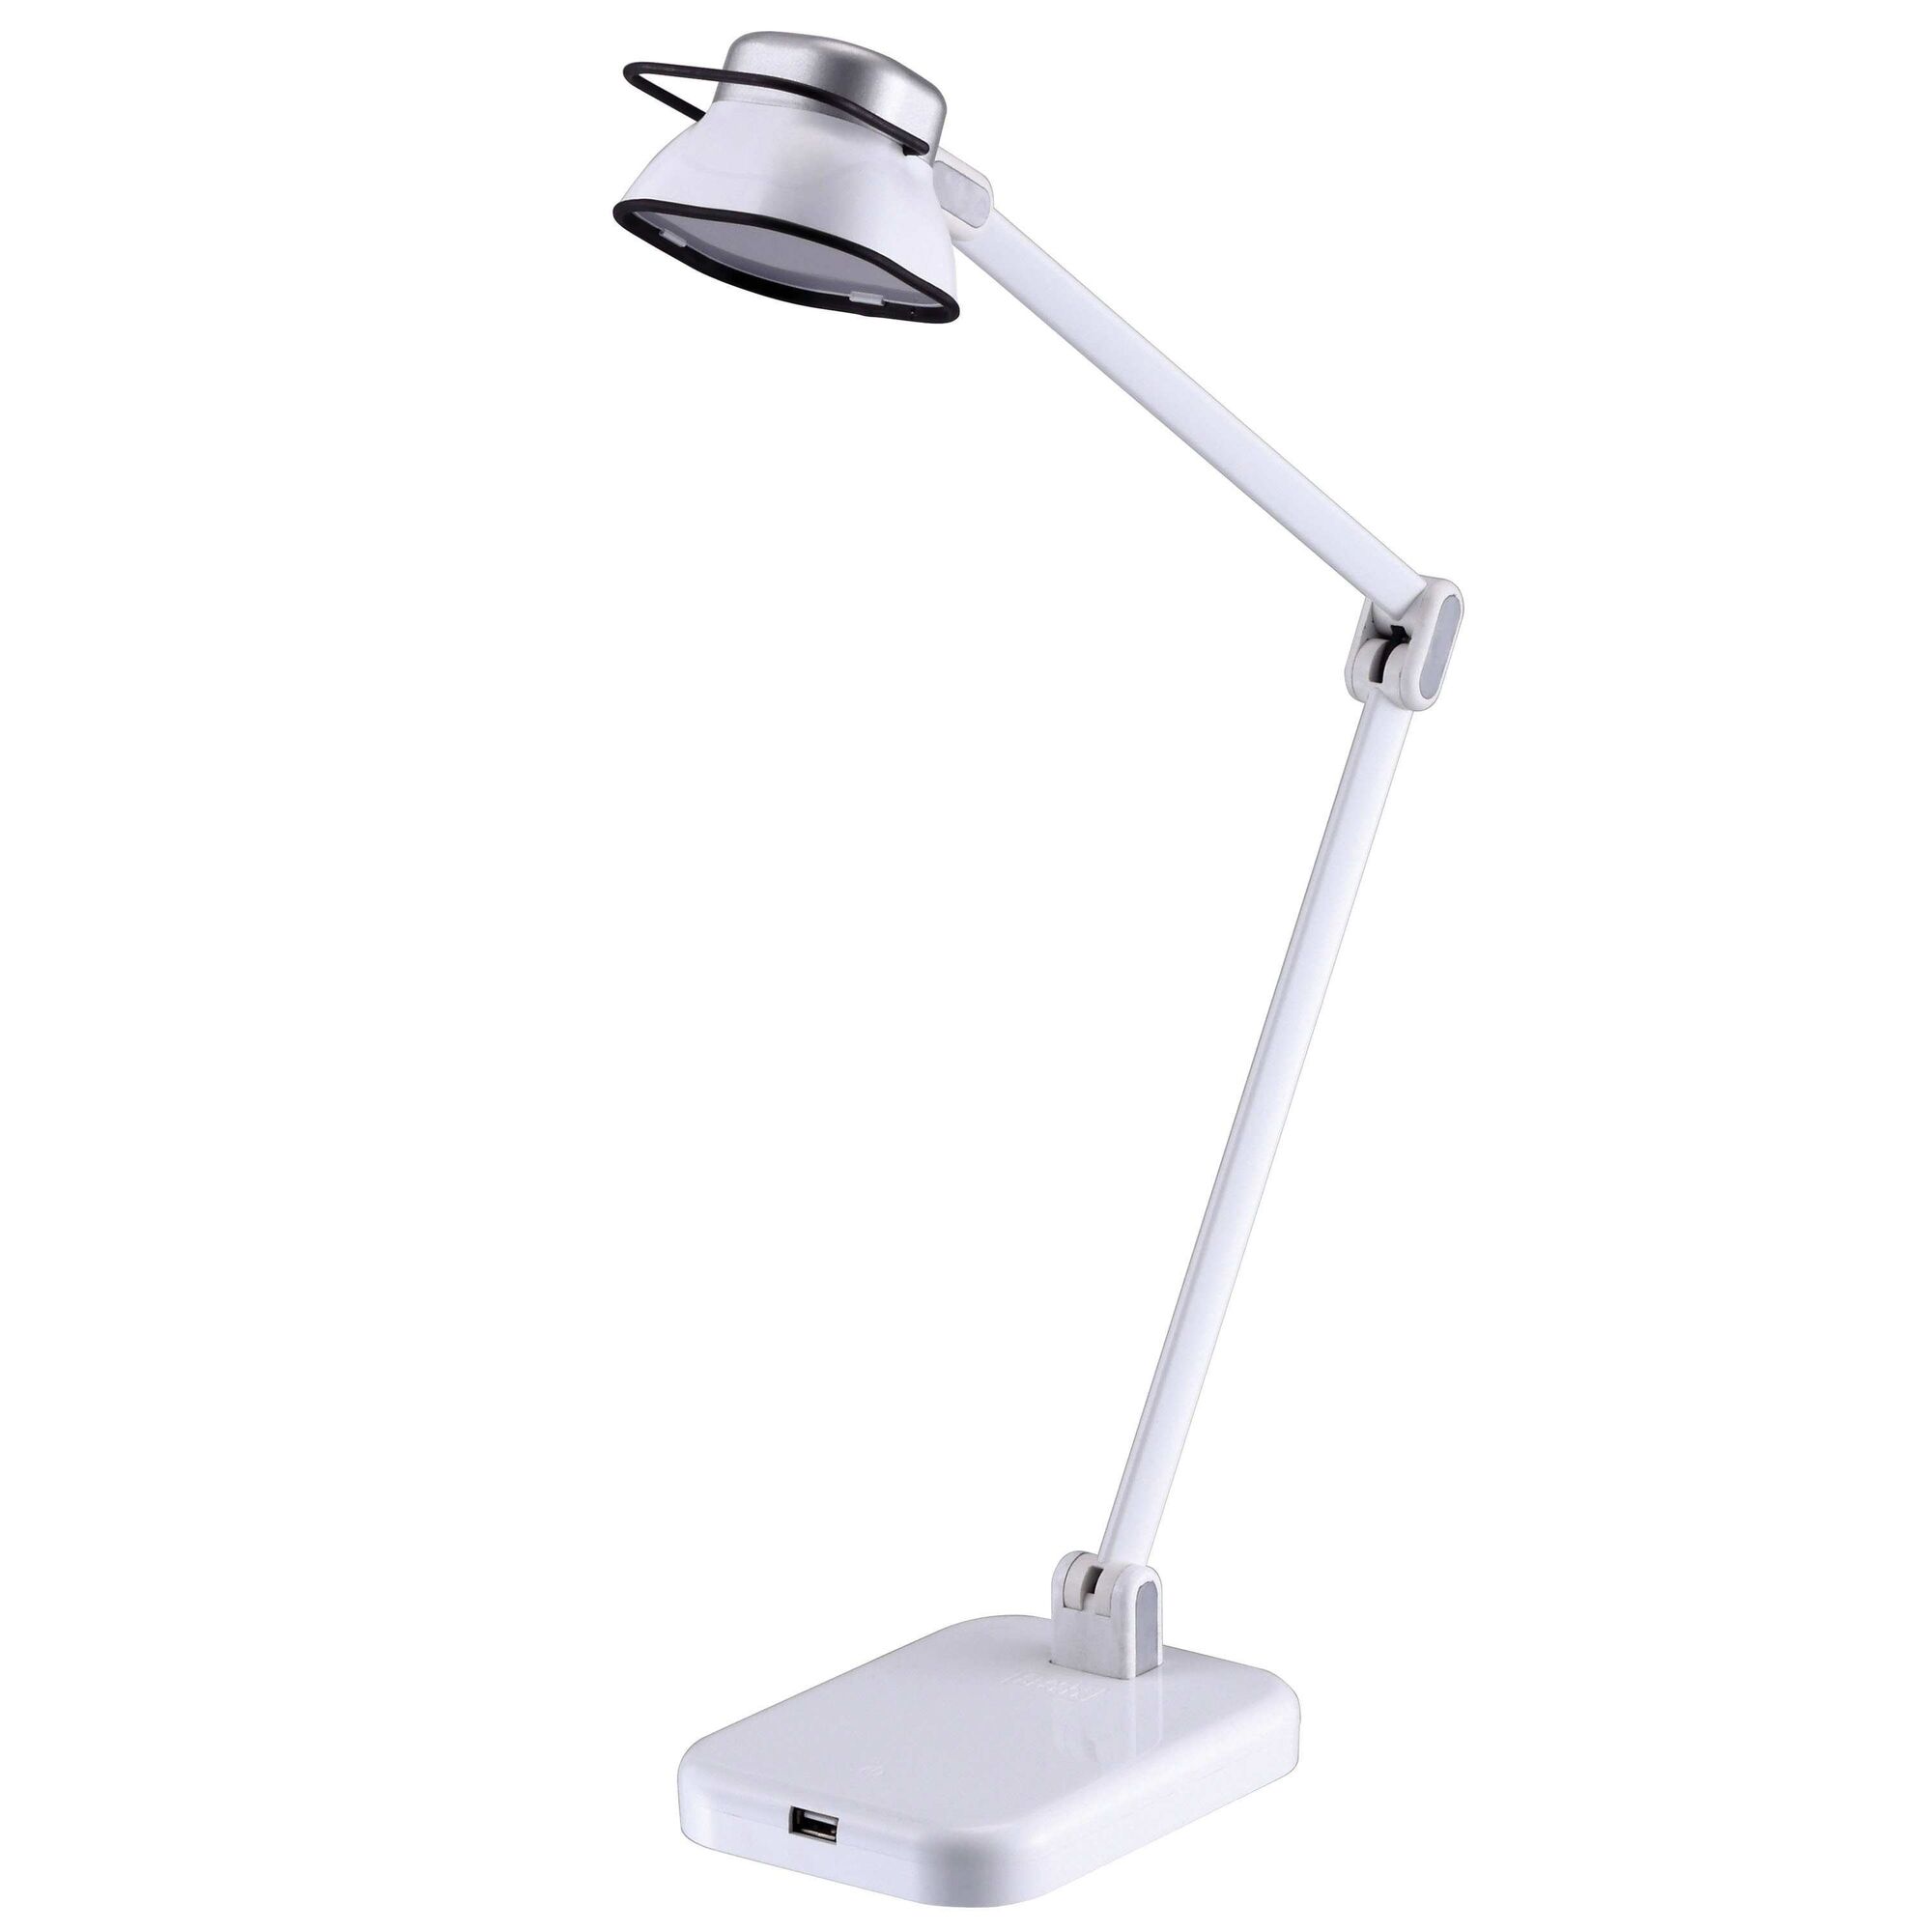 Profile of elate dual arm L E D desk lamp.